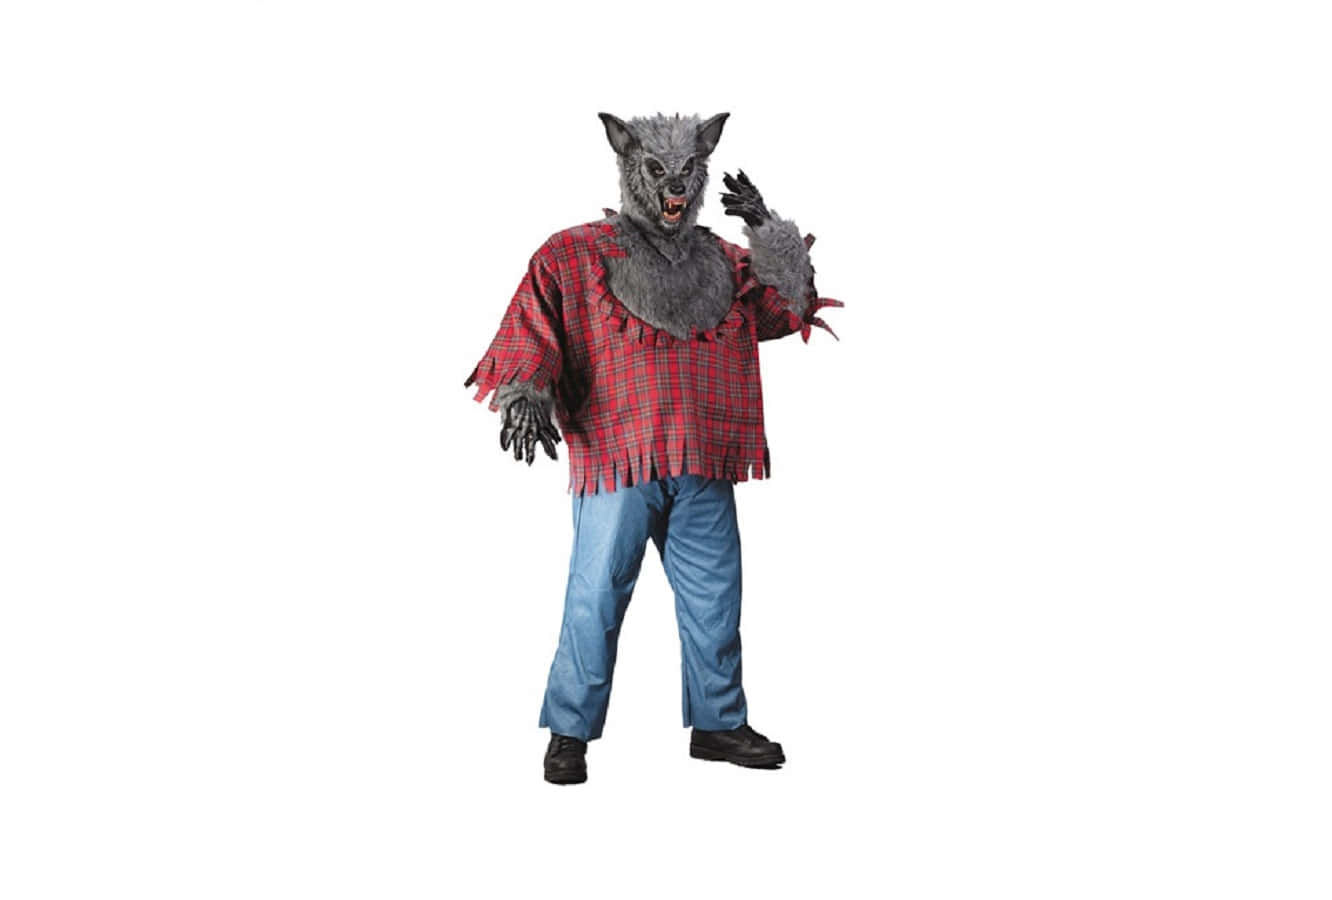 Ferocious Werewolf Costume in a Full Moon Night Wallpaper